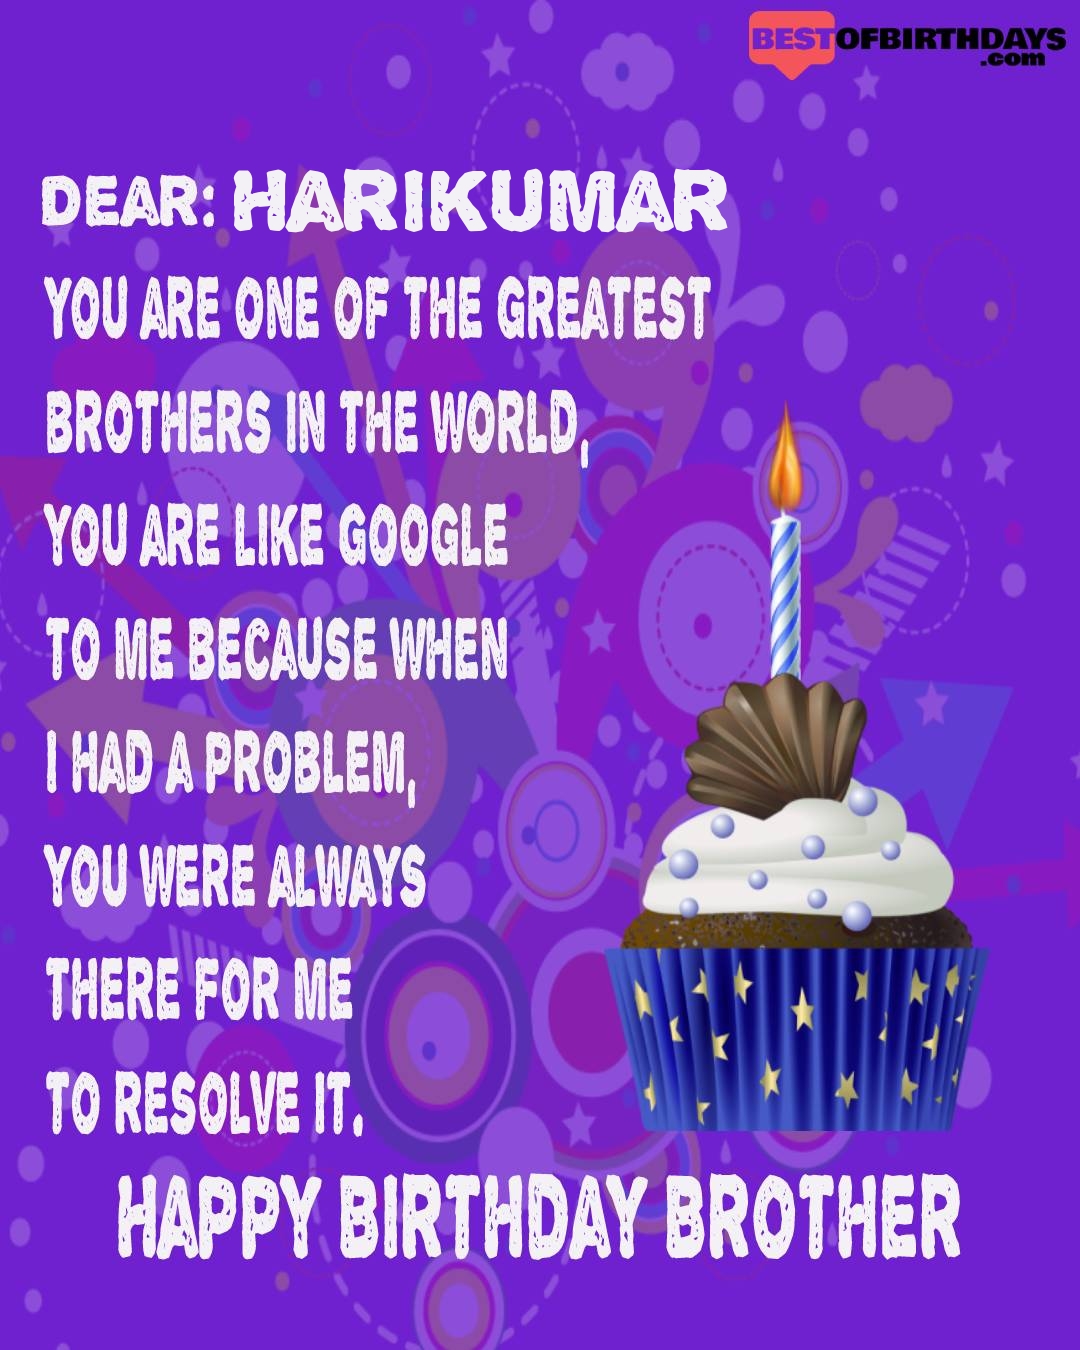 Happy birthday harikumar bhai brother bro